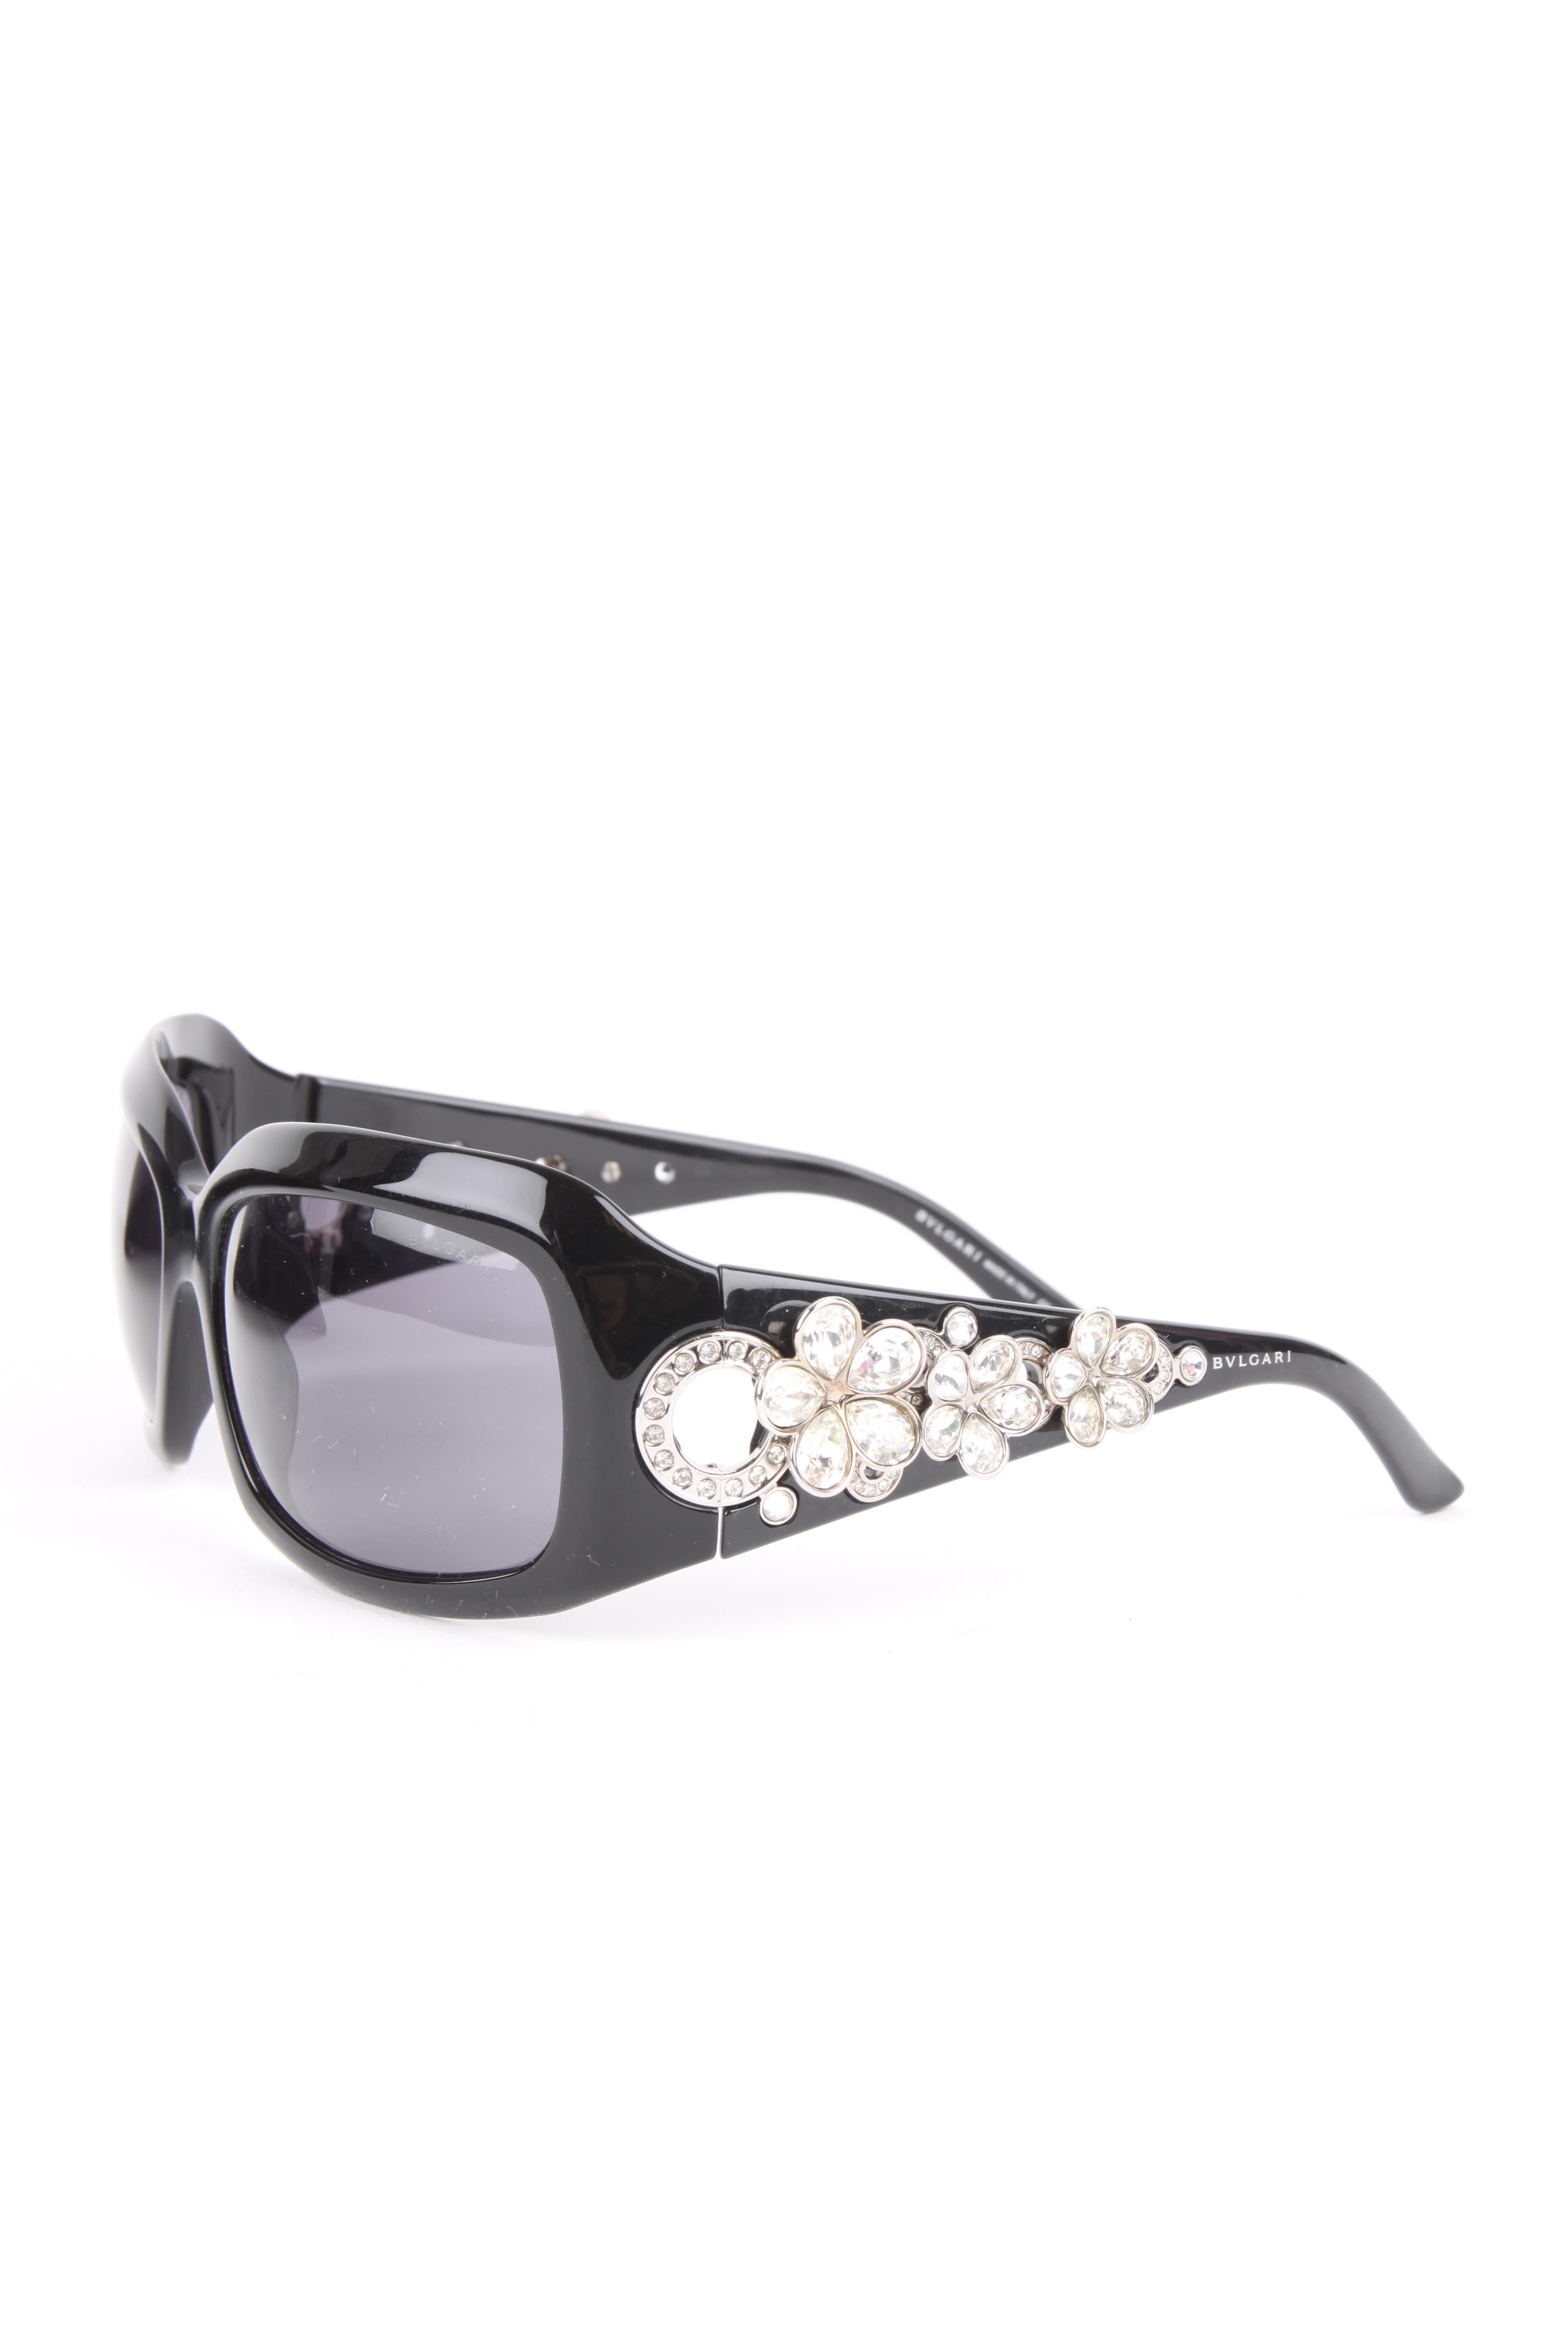 bvlgari swarovski crystal sunglasses